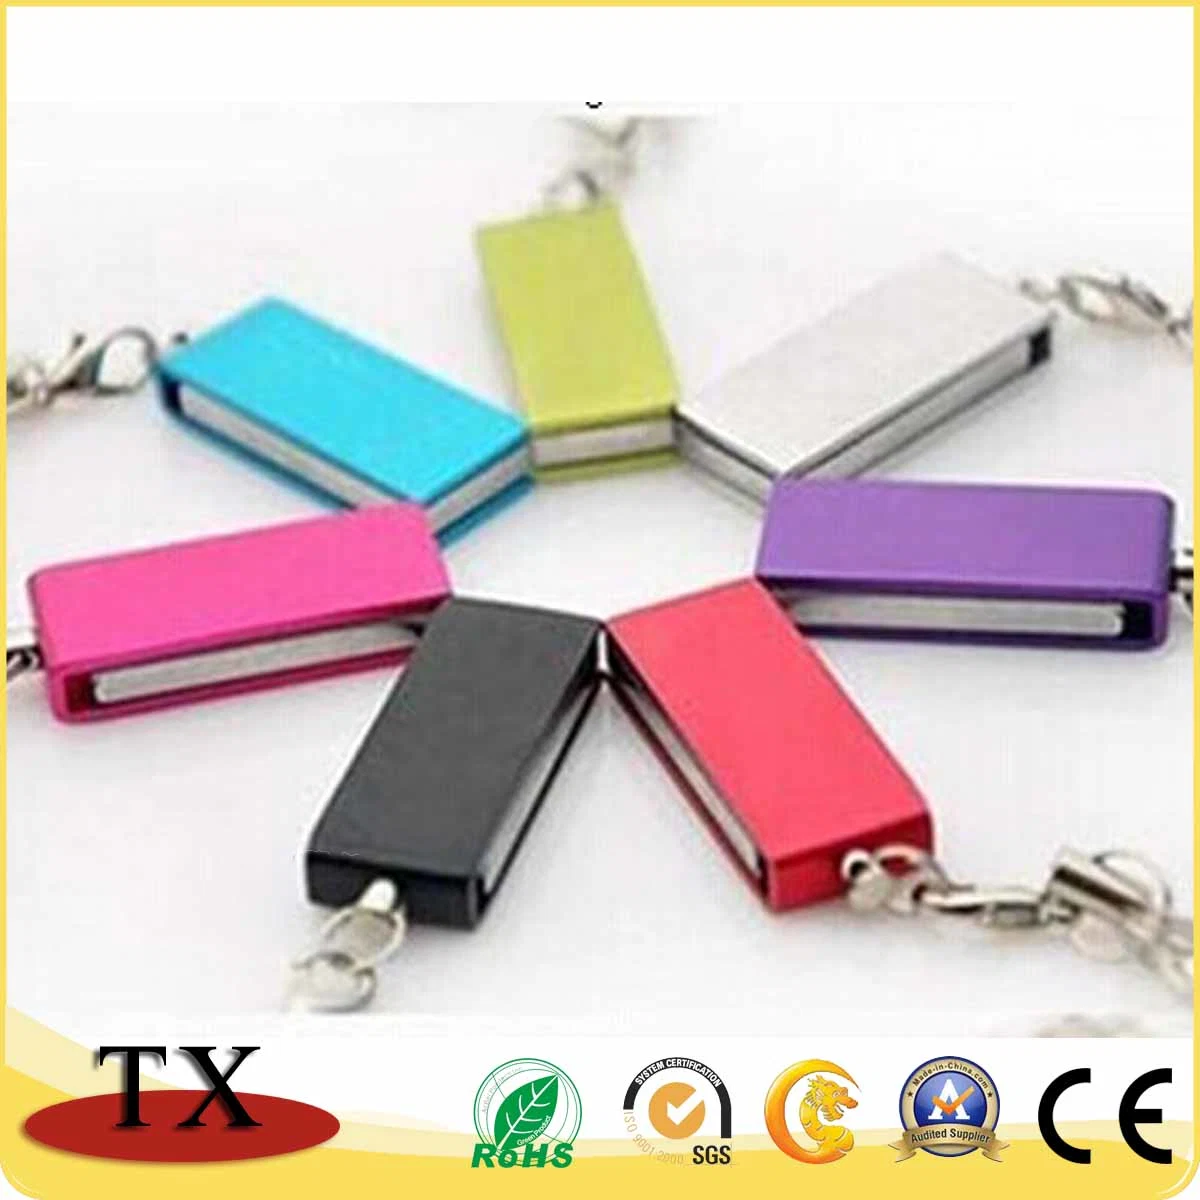 Металла и пластика на USB флэш-накопителей USB USB флэш-диск USB Memory Stick™ для создания рекламных подарков